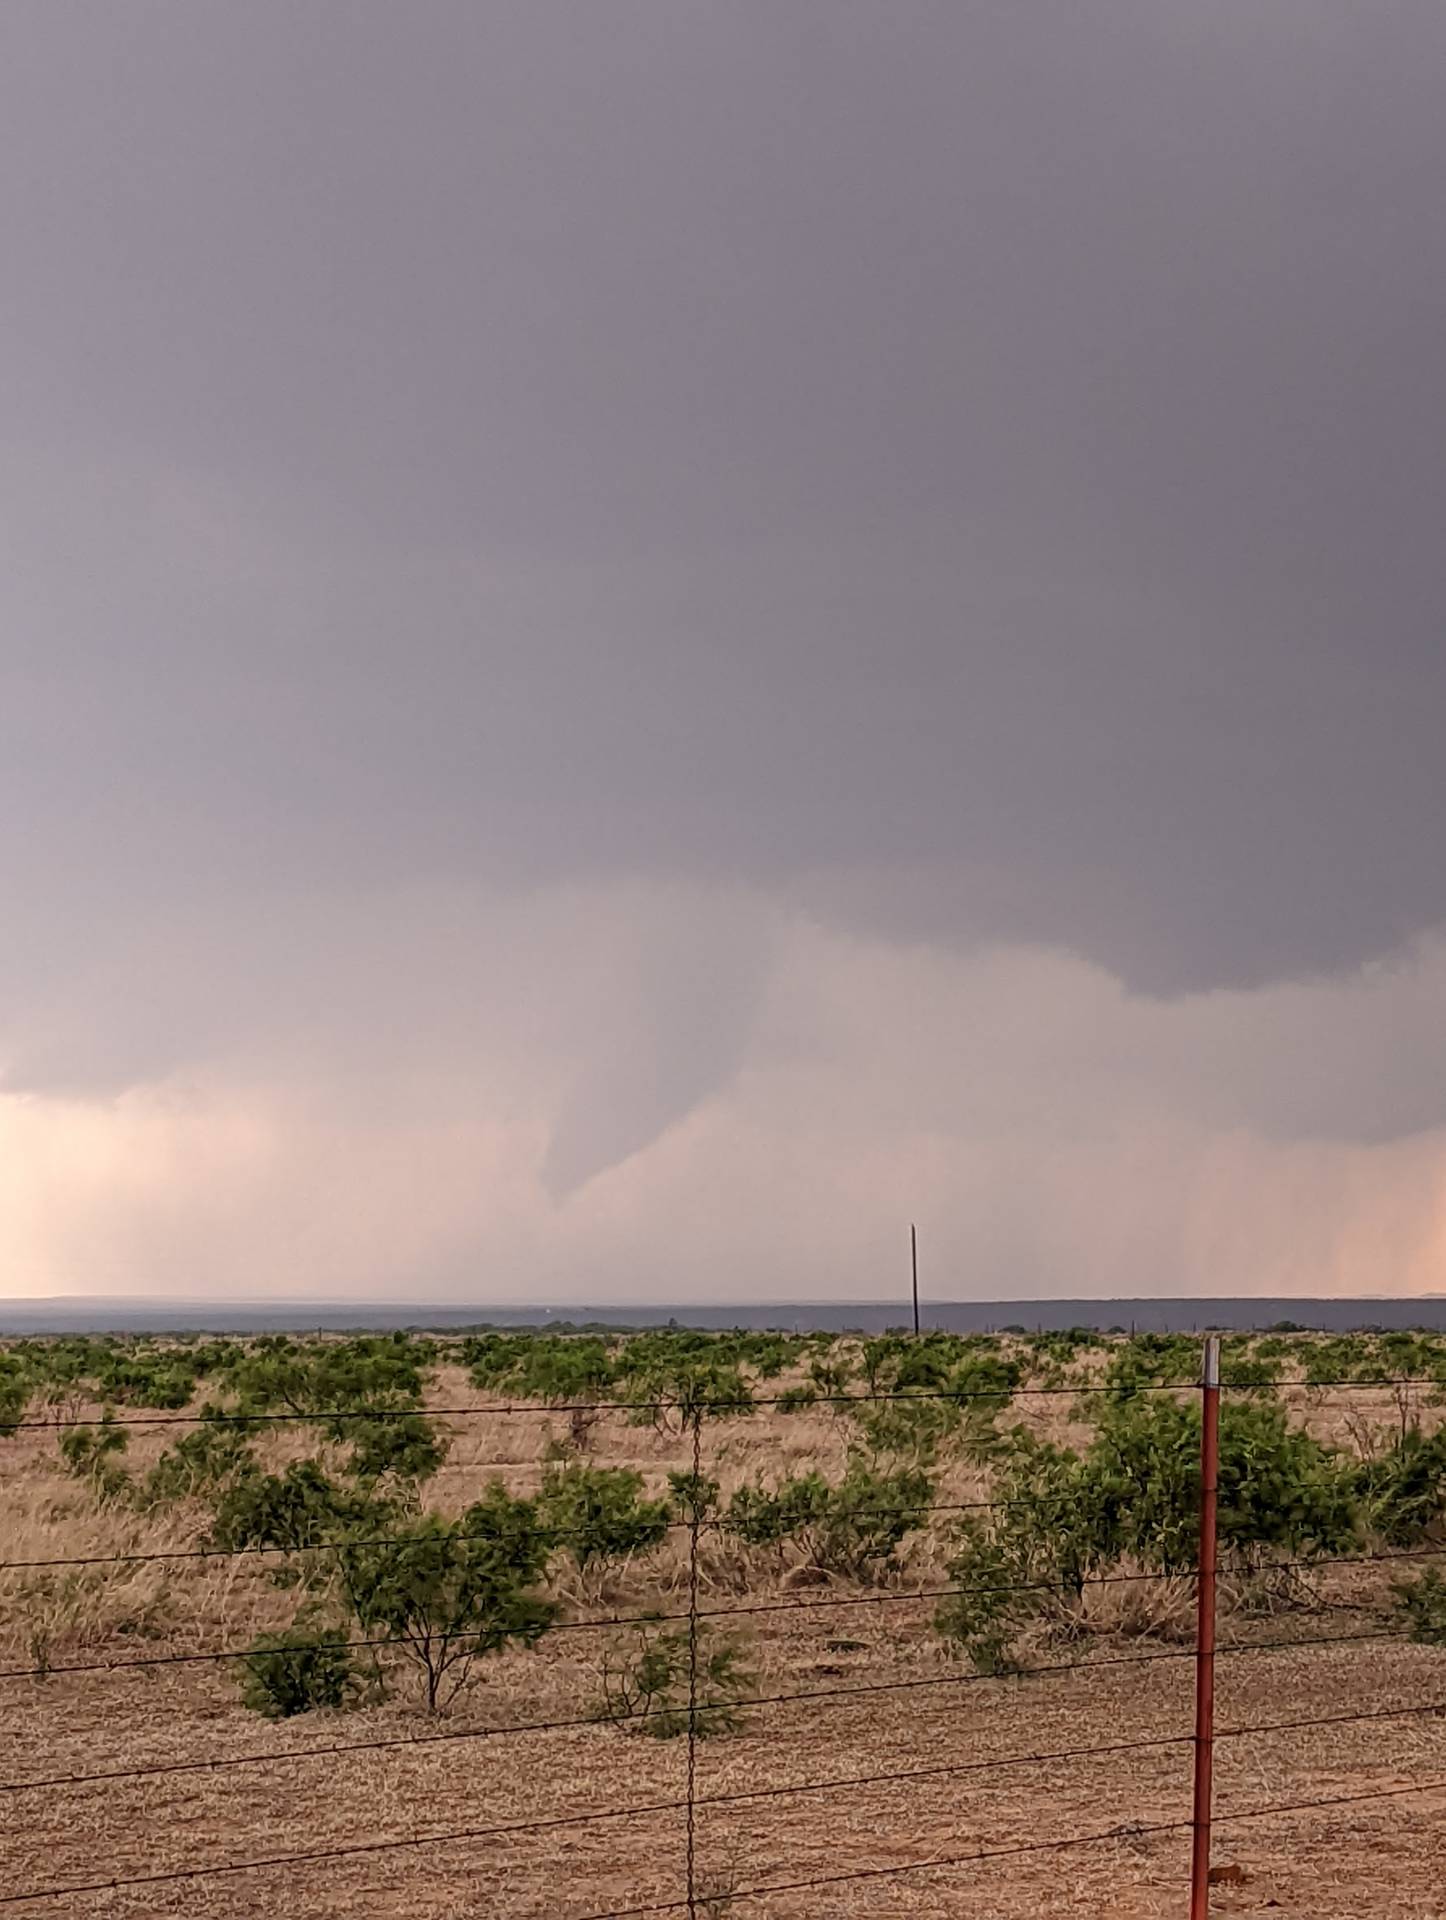 Tornado continuing southwest of Foard City, Texas. #txwx @nwsnorman